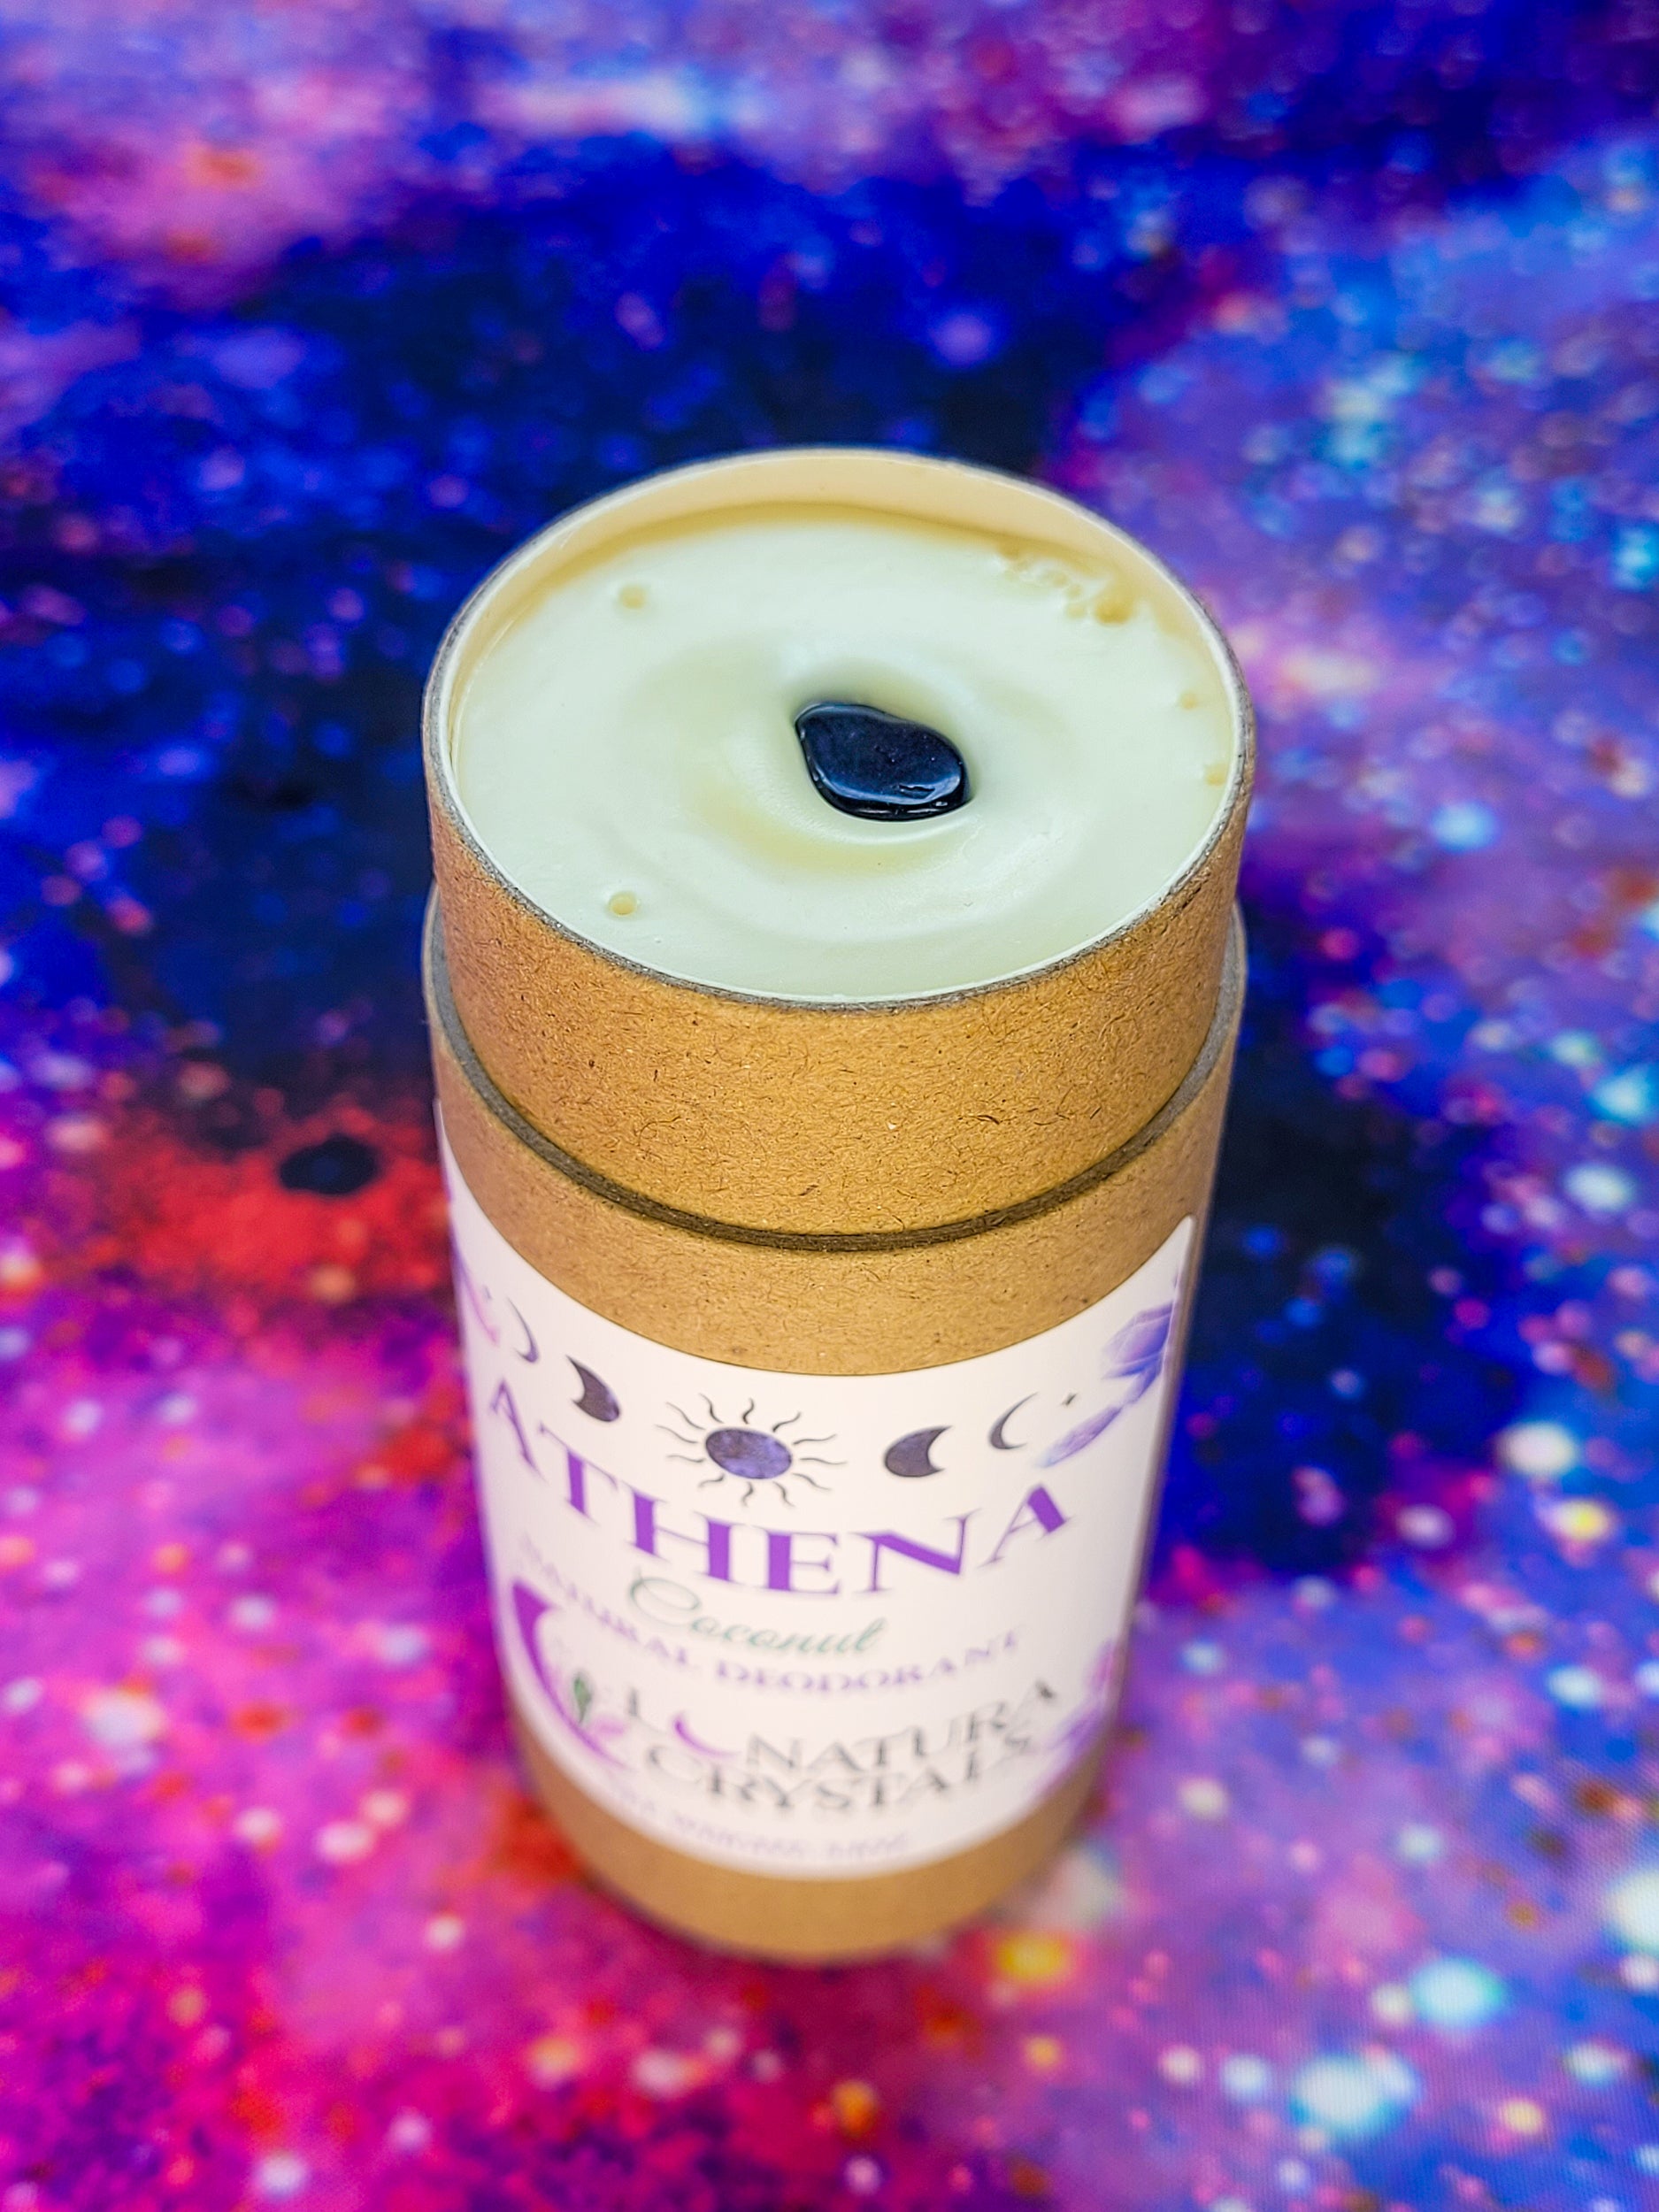 Athena (Coconut) | Natural Deodorant | Aluminum & Baking Soda Free!